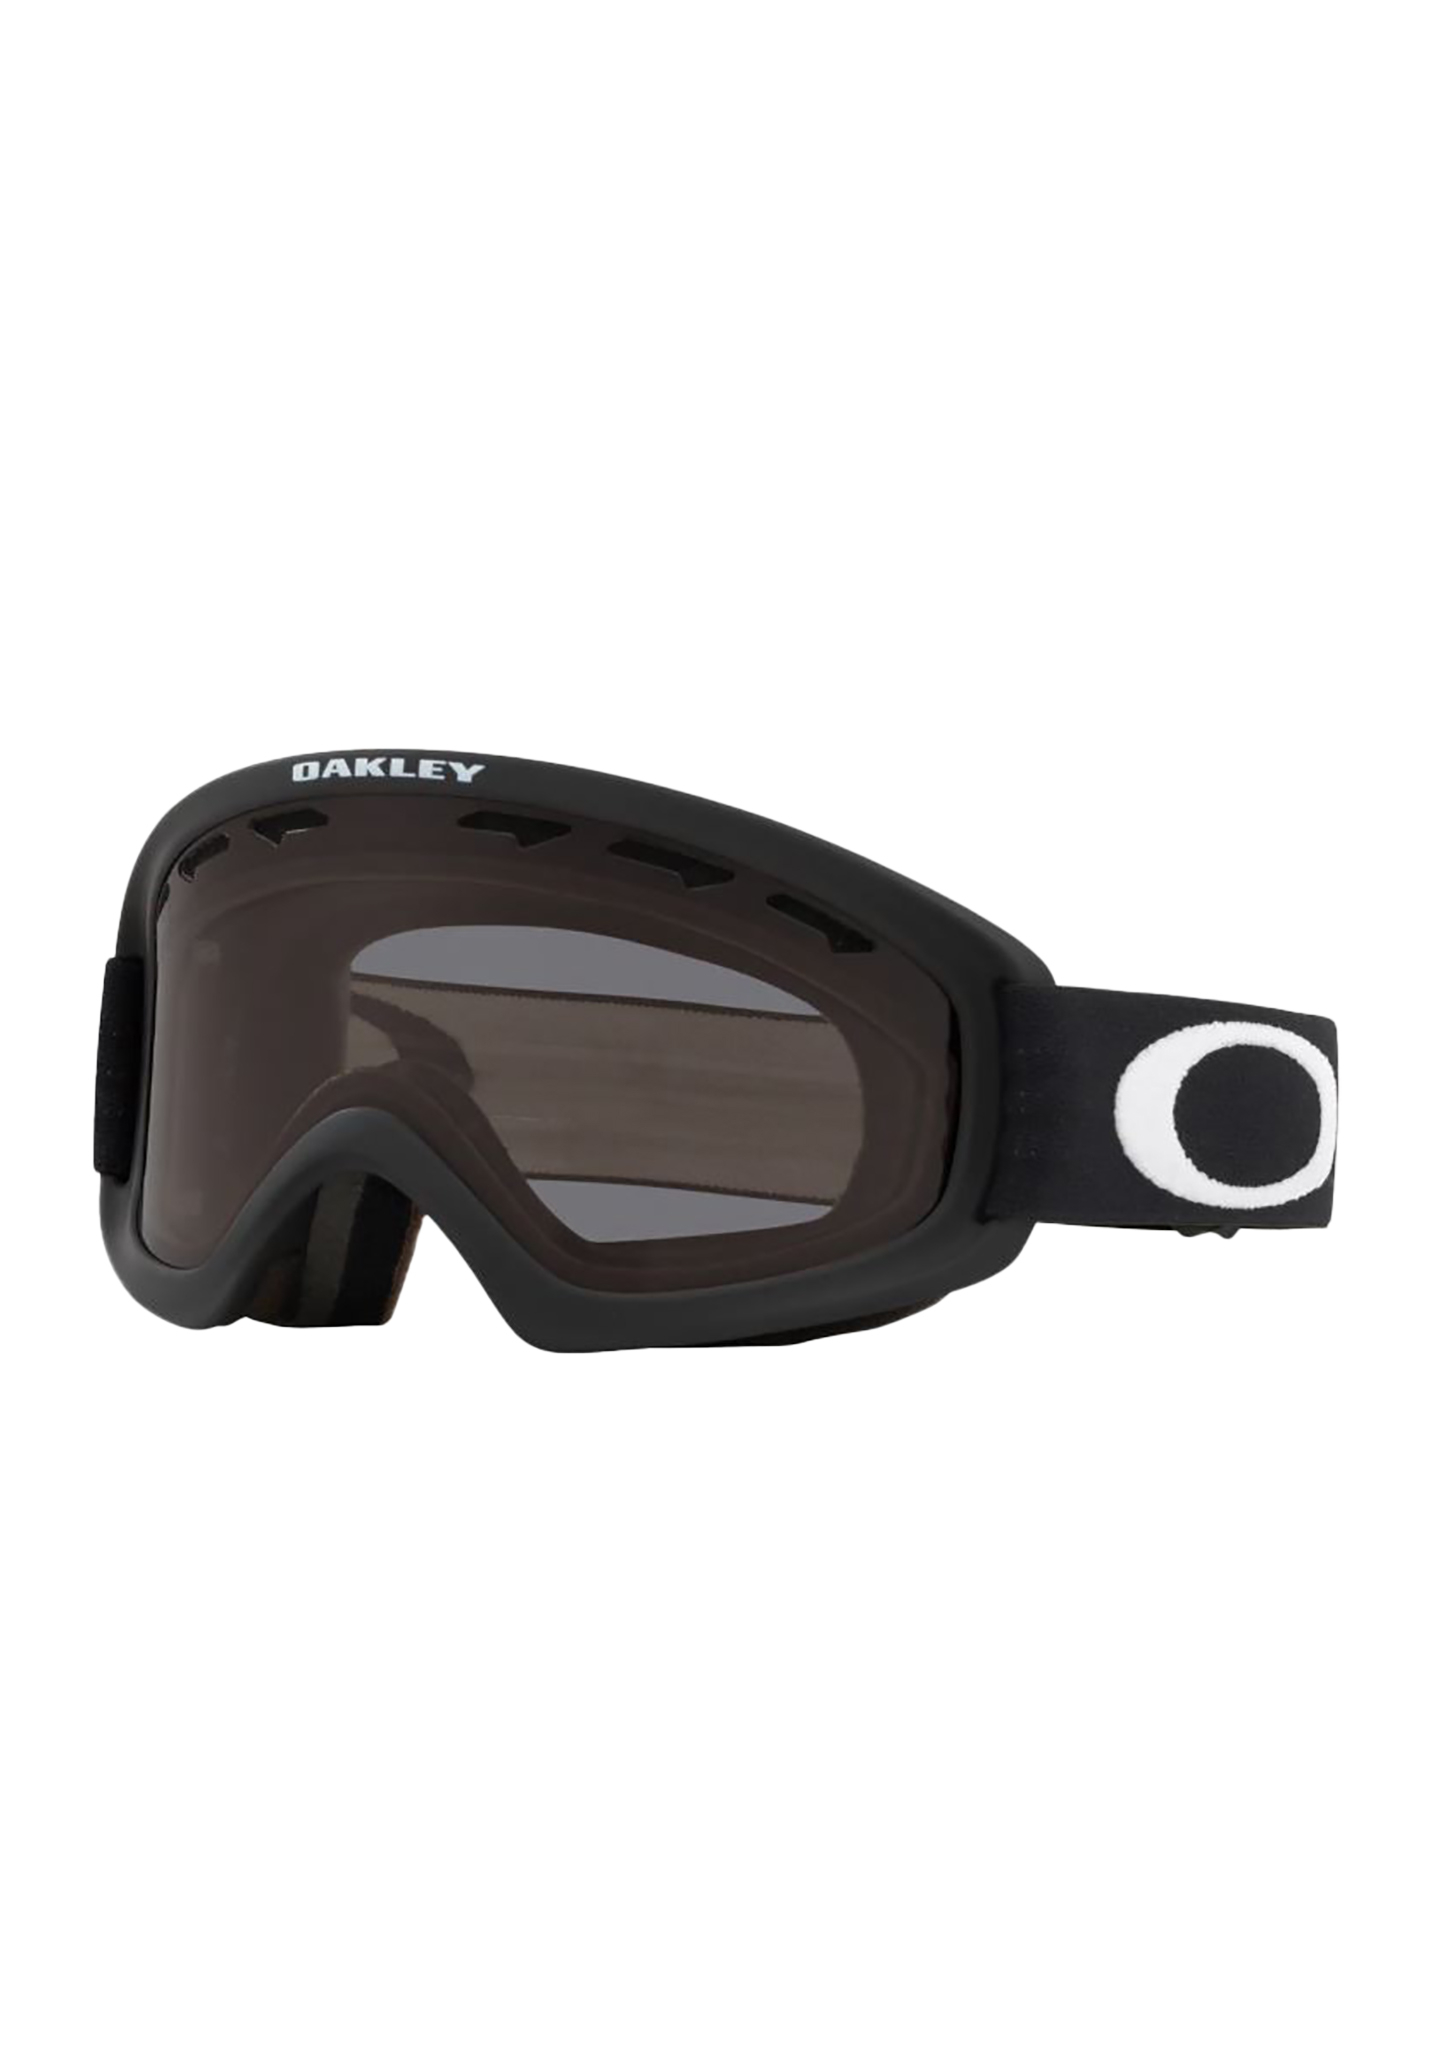 Oakley O Frame 2.0 Pro S Snowboardbrillen mattschwarz/dunkelgrau One Size